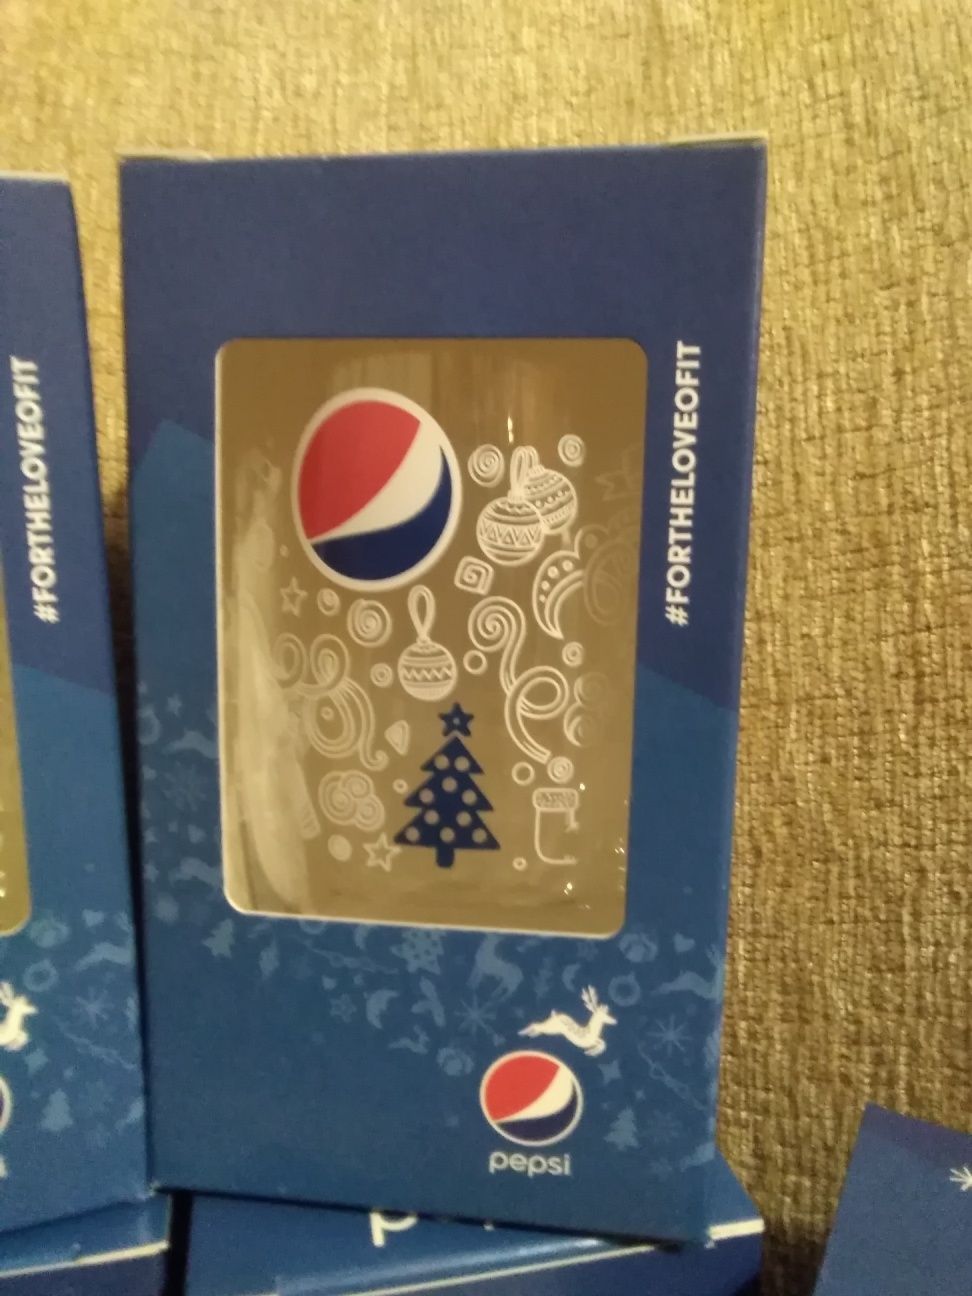 Szklanki Pepsi 12.5cm wysoka